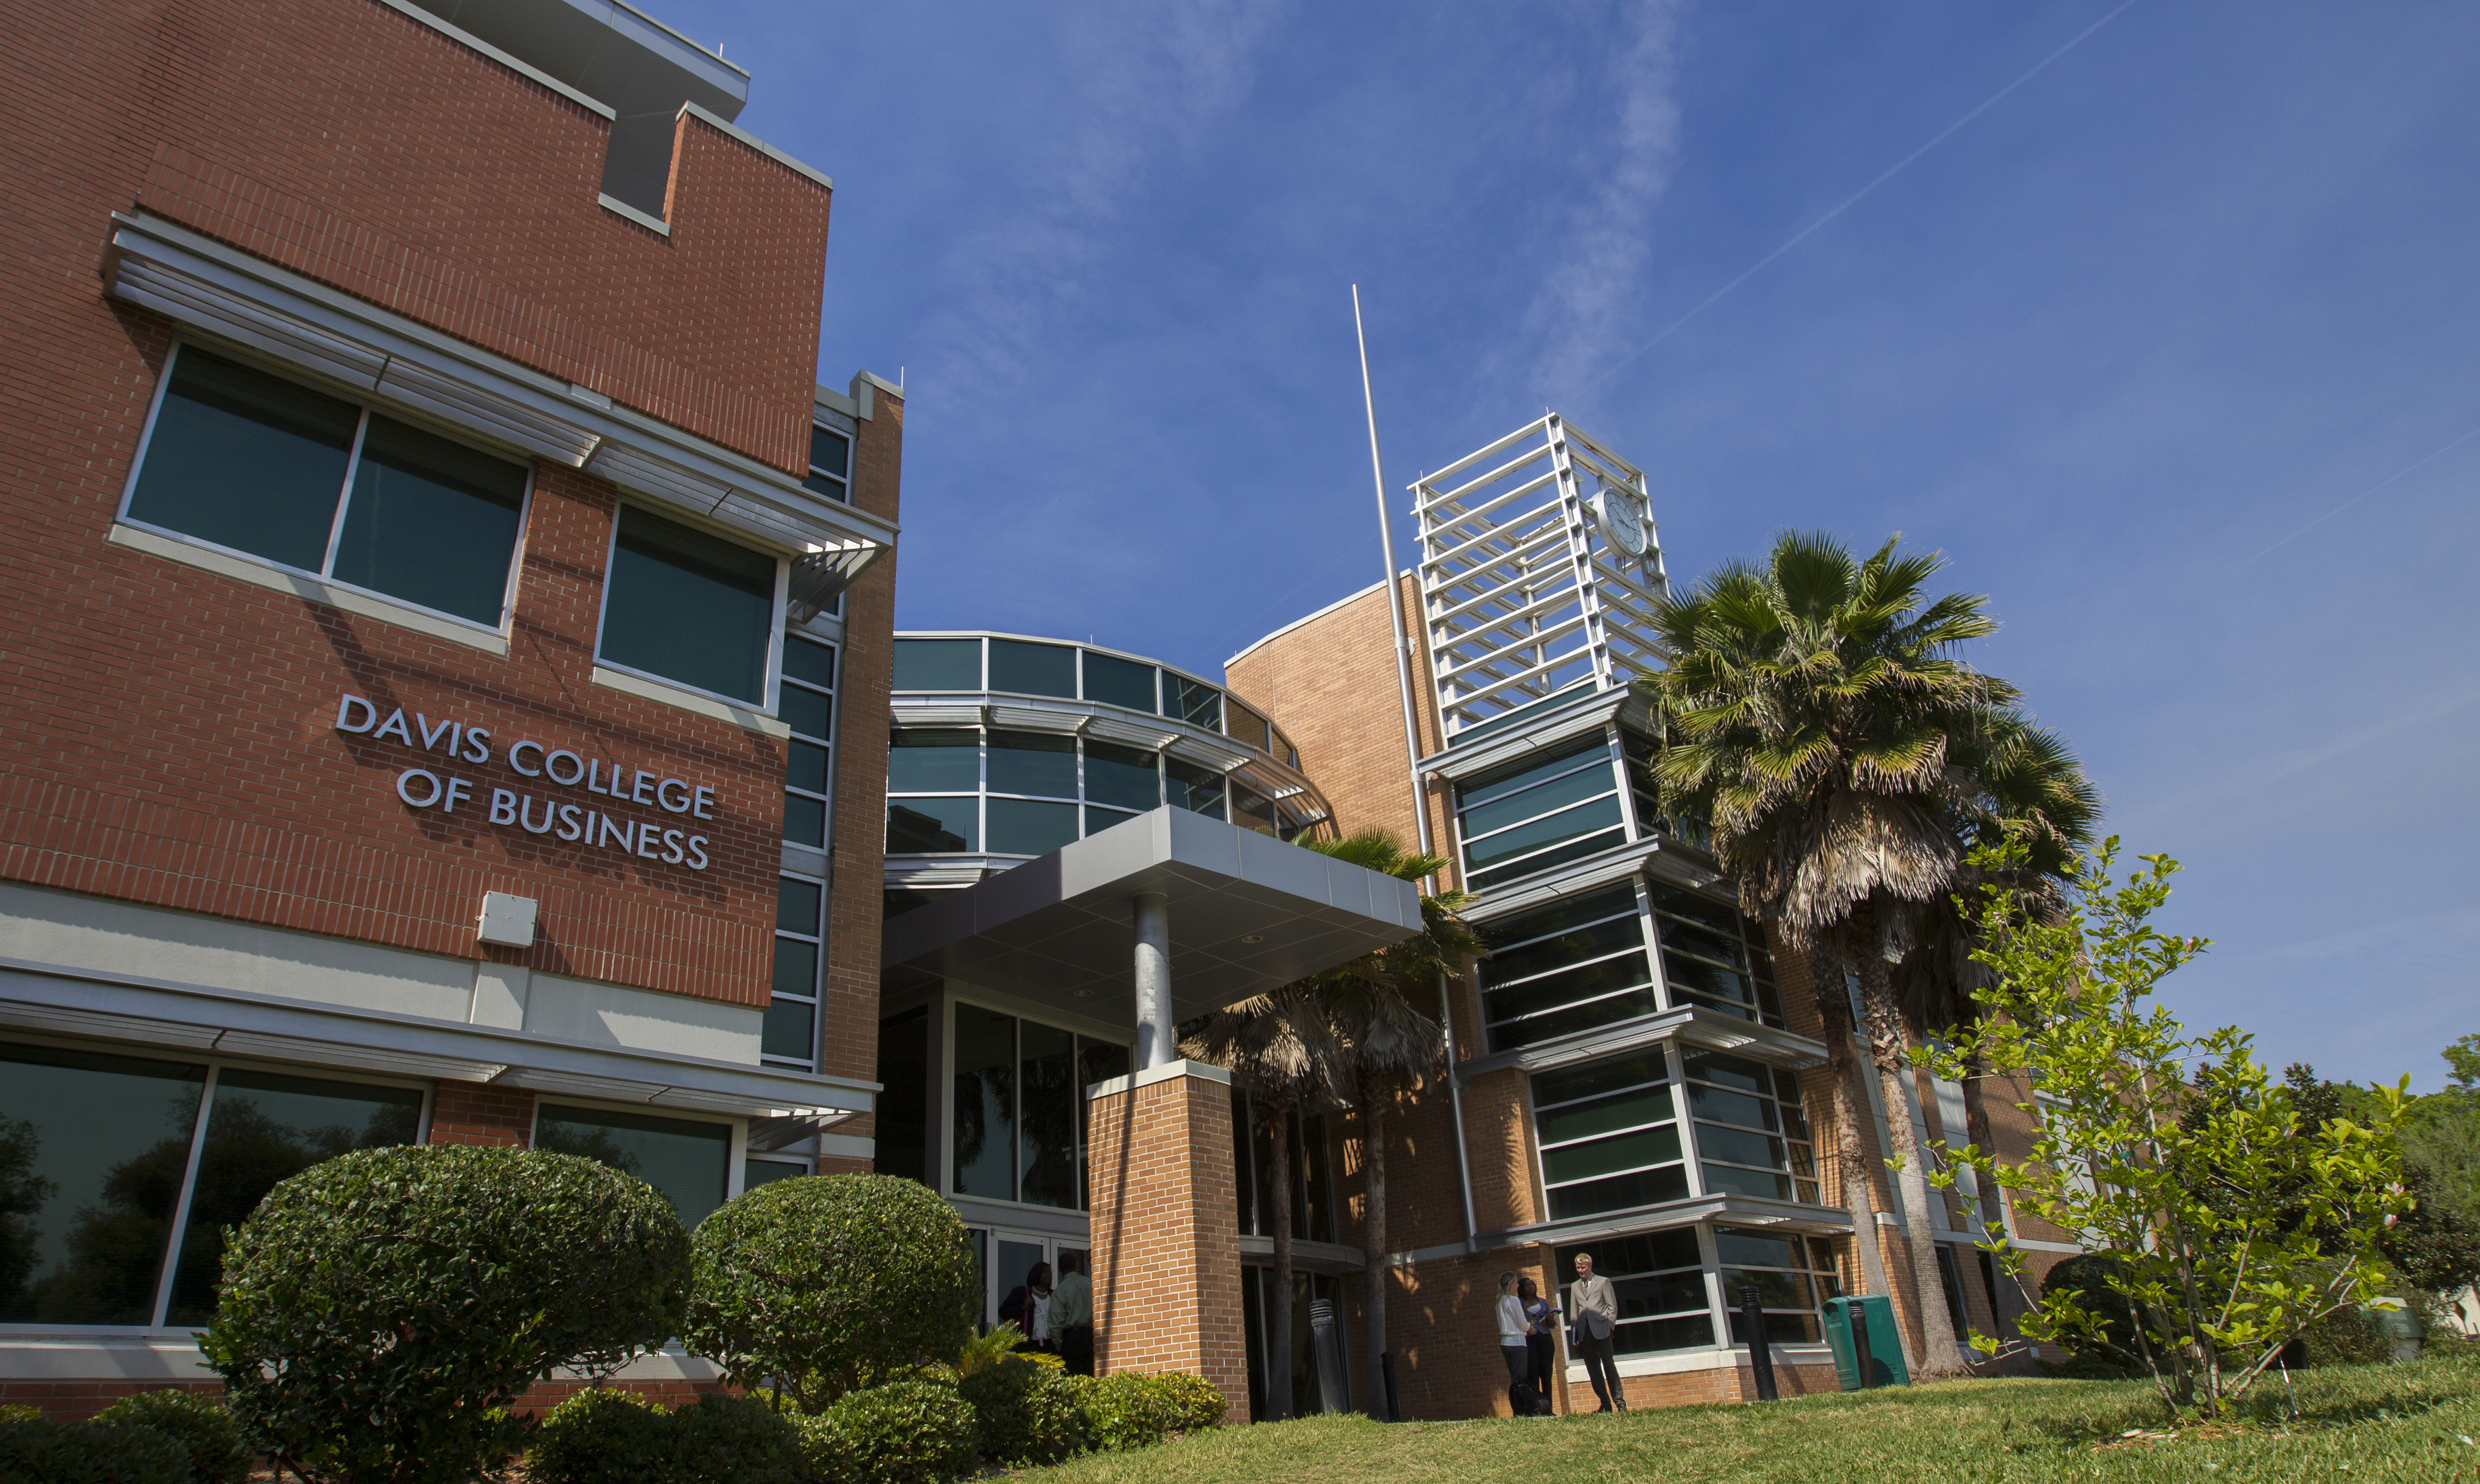 Jacksonville University Davis College of Business & Technology building.